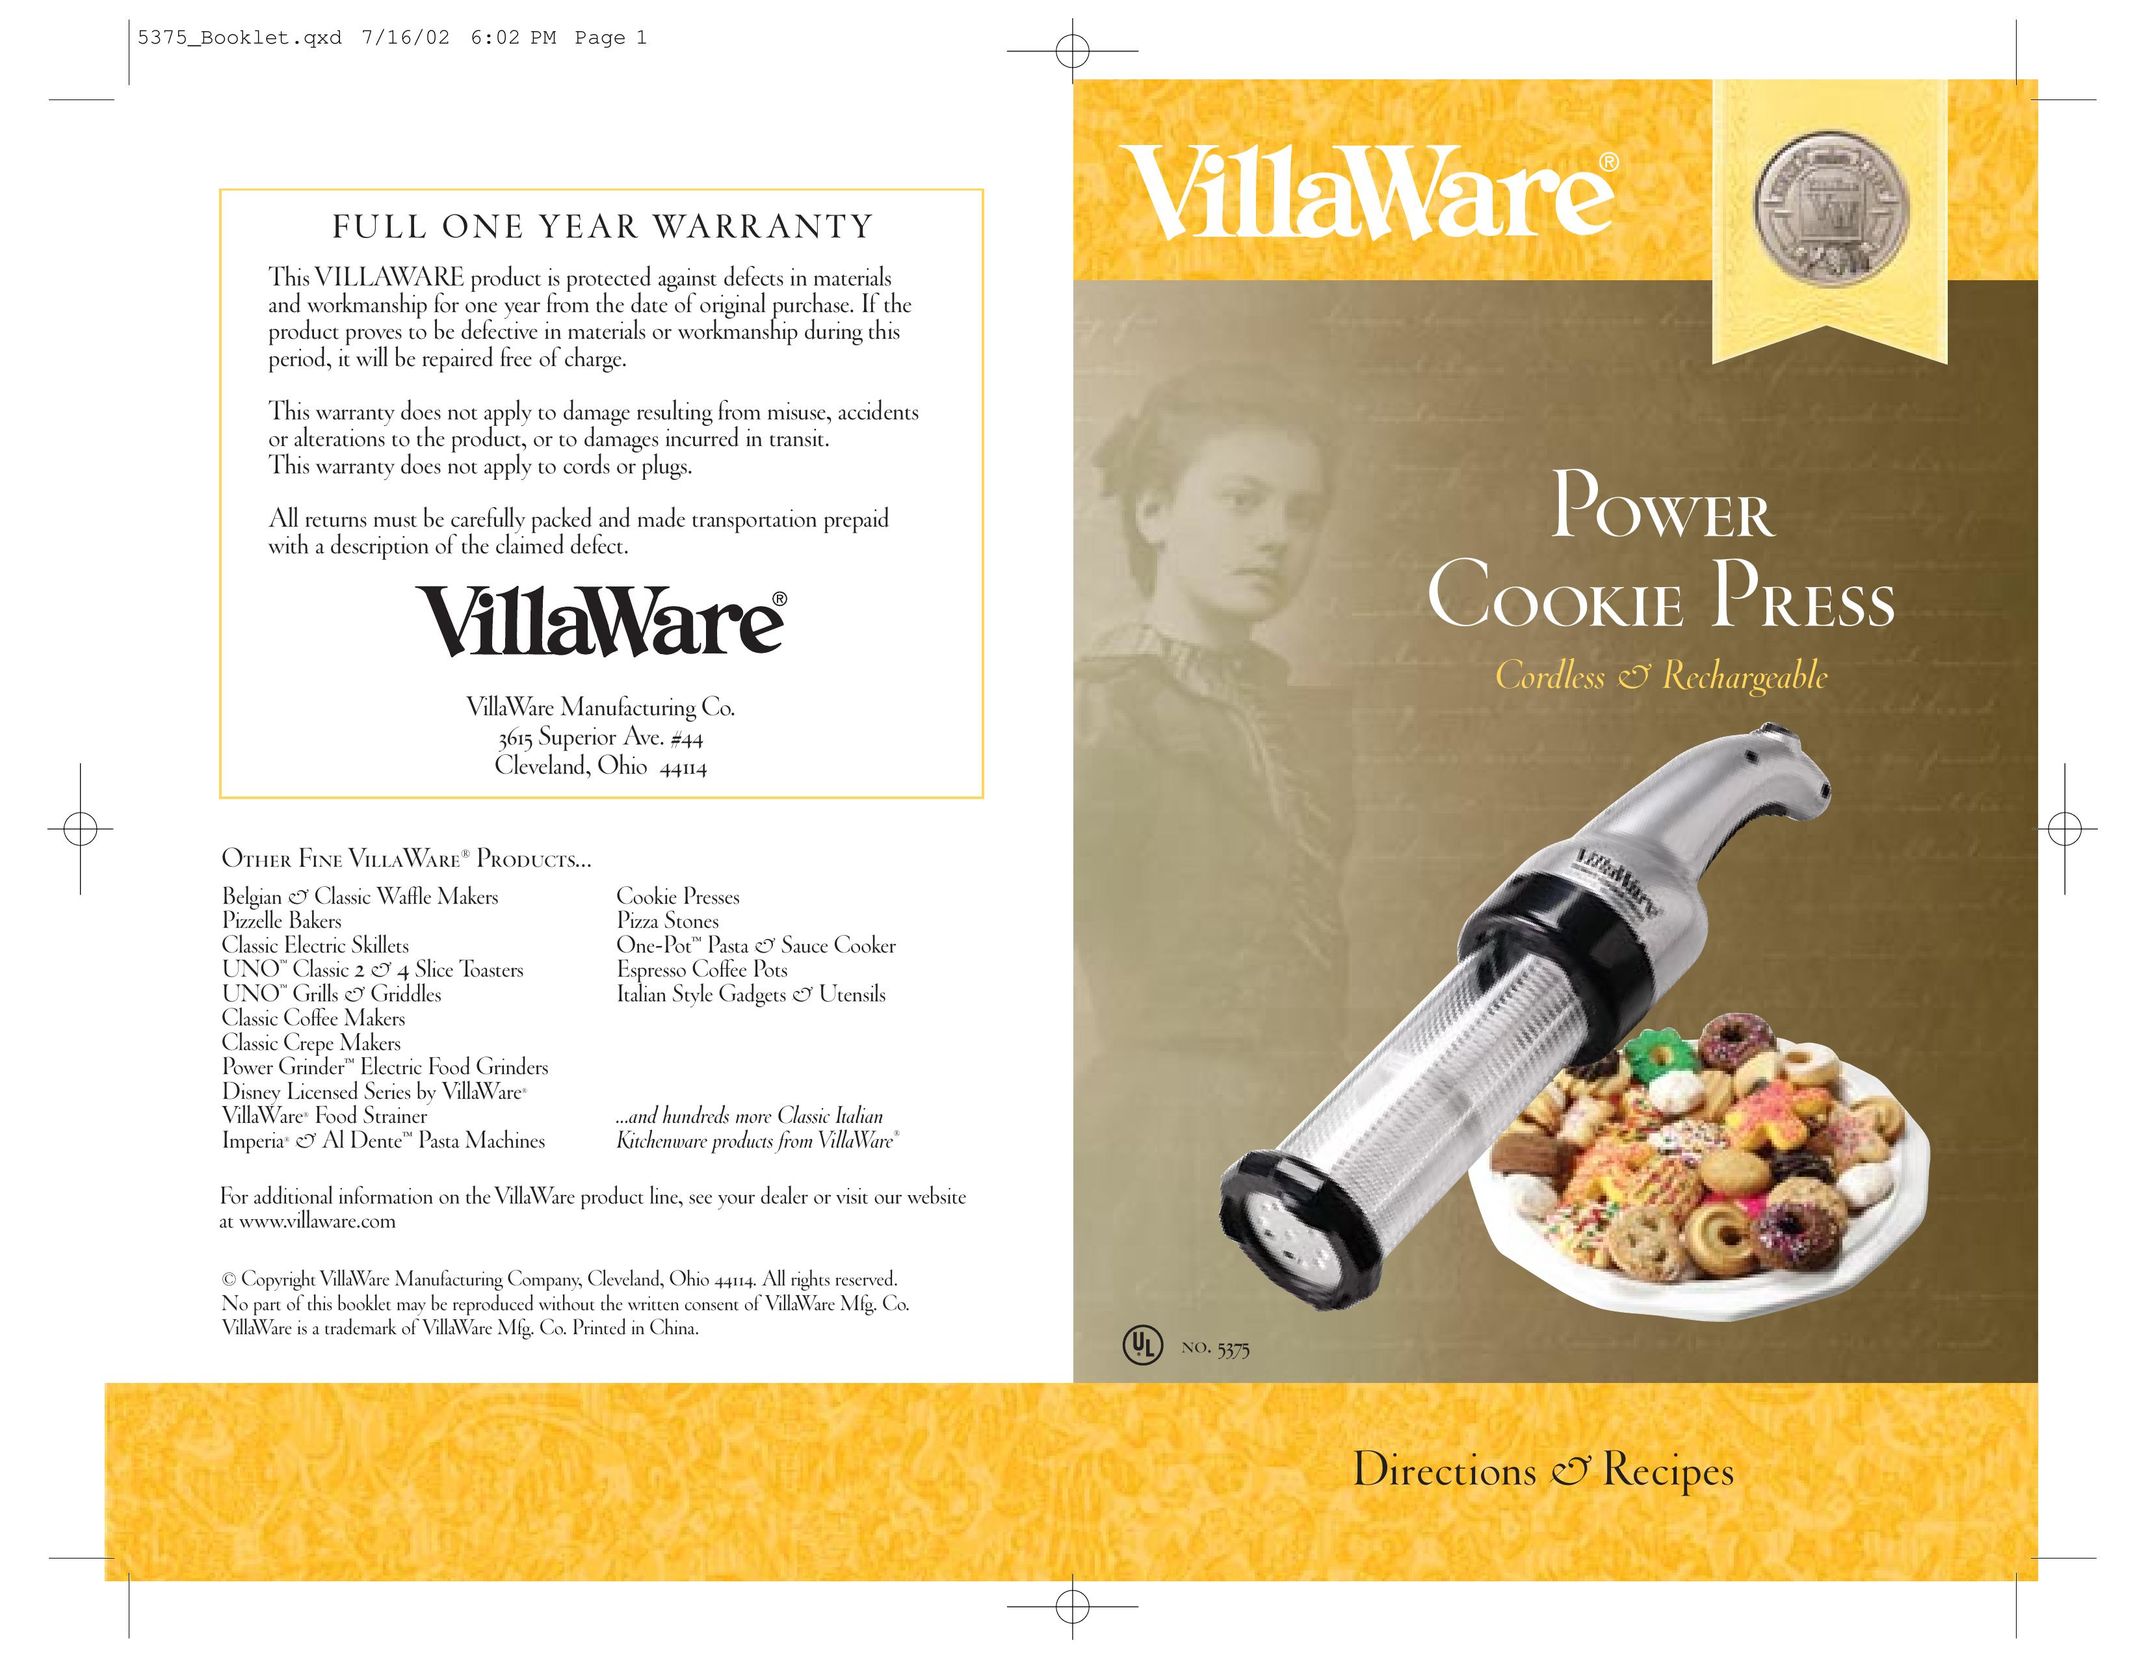 Villaware Electric Cookie Press Electric Cookie Press User Manual